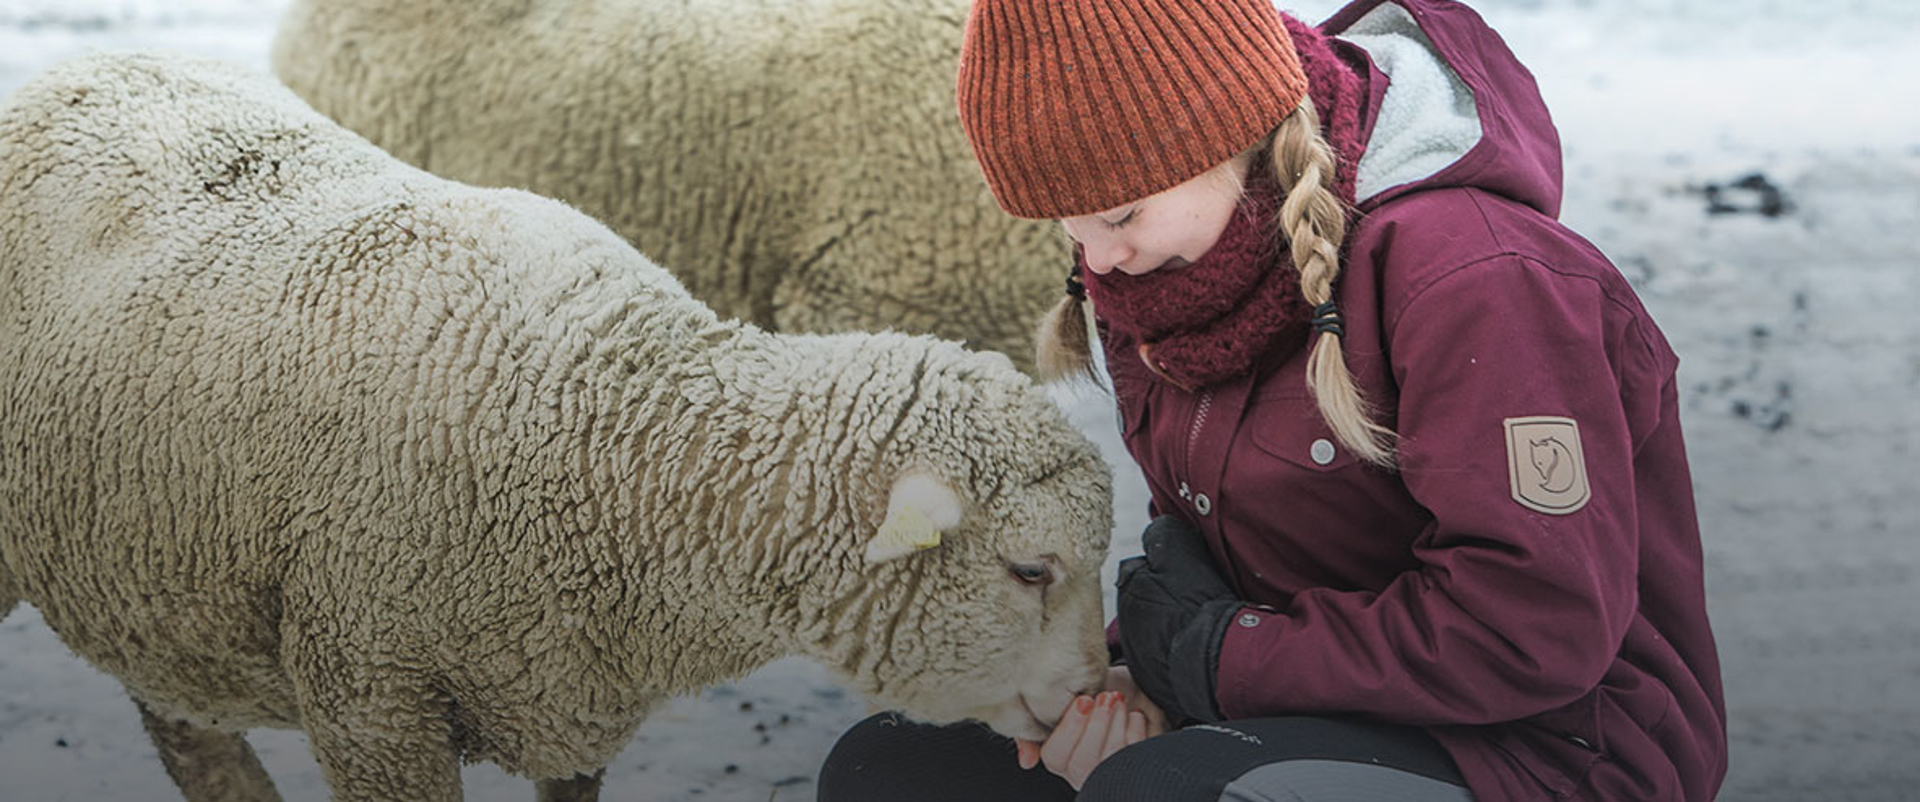 Woman petting sheep